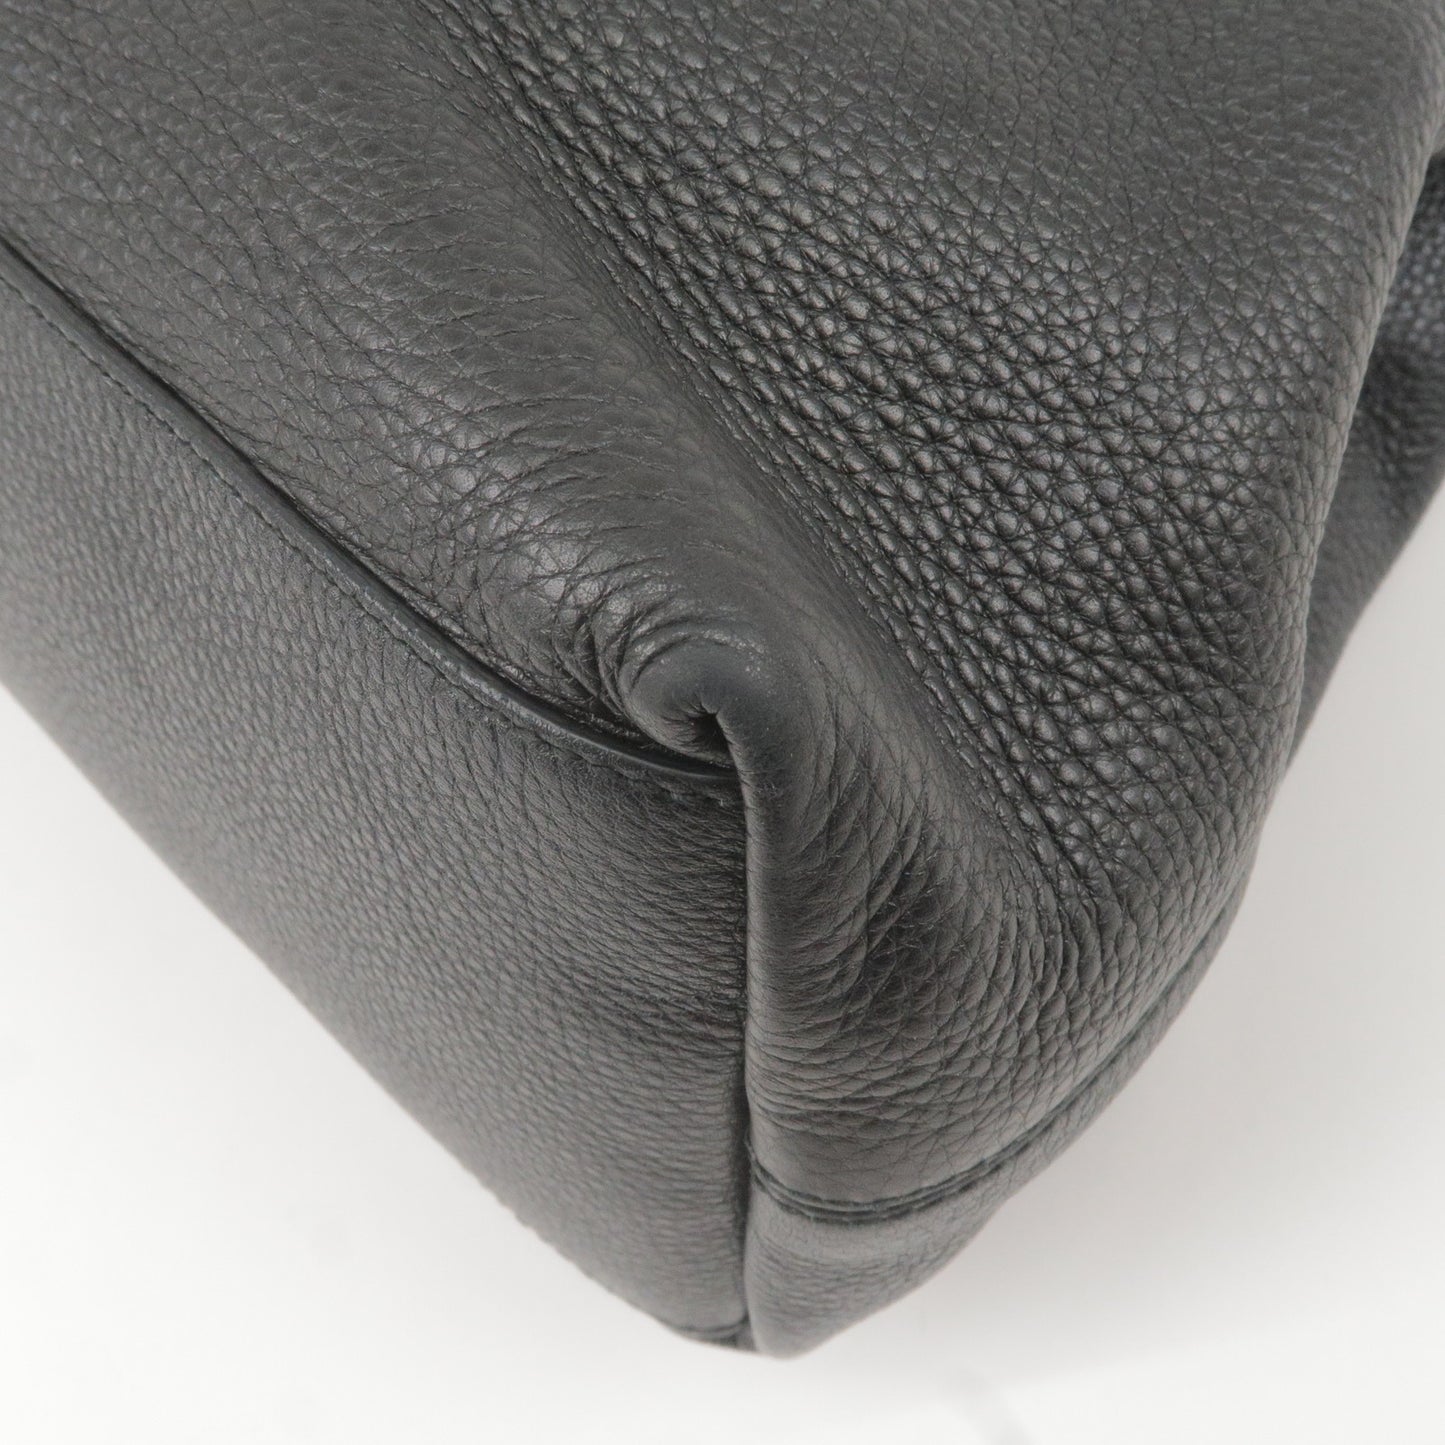 GUCCI SOHO Interlocking G Leather Chain Shoulder Bag Black 308982